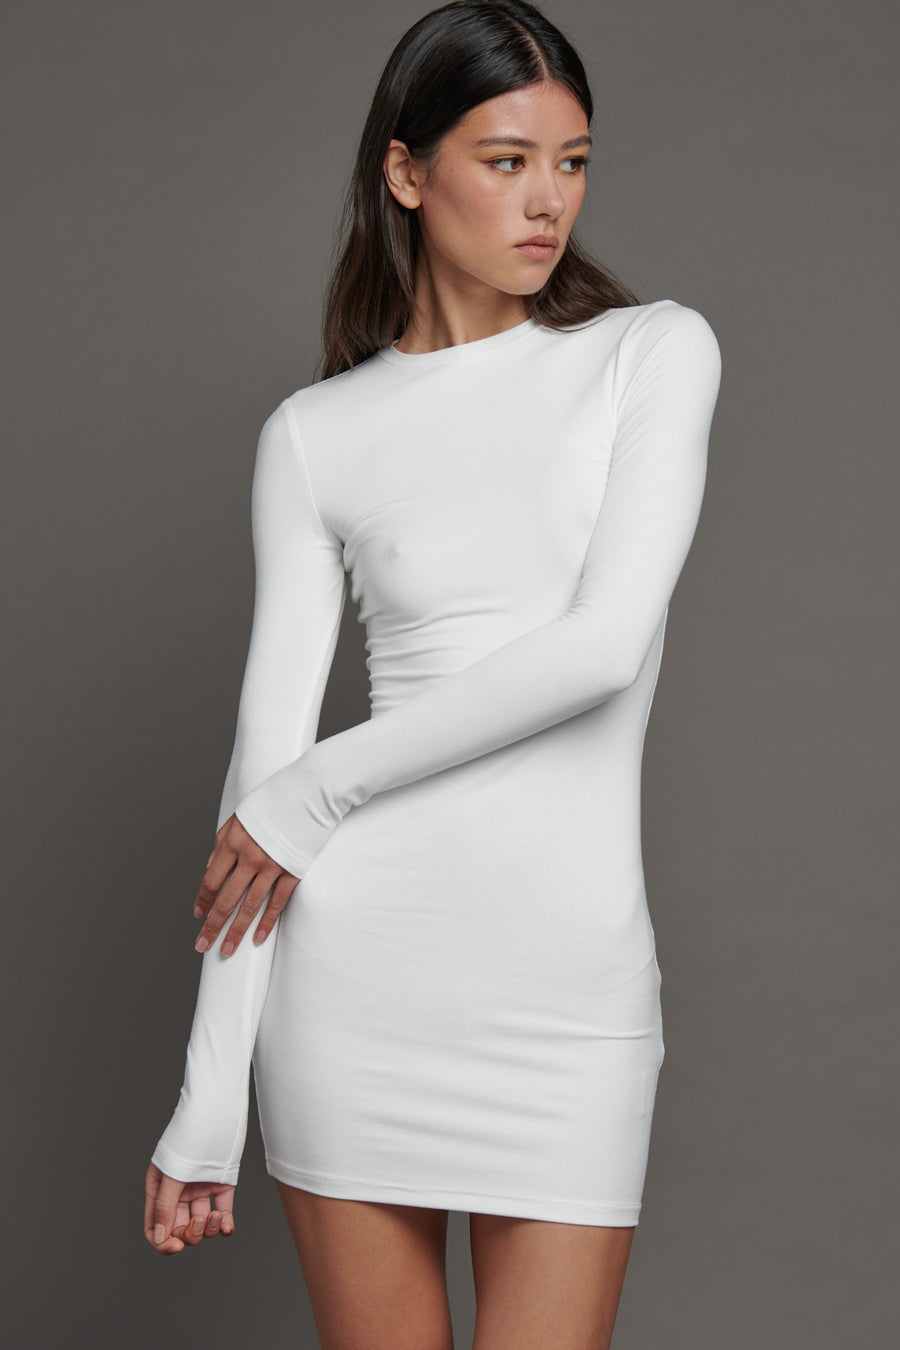 WAYWARD DRESS - WHITE